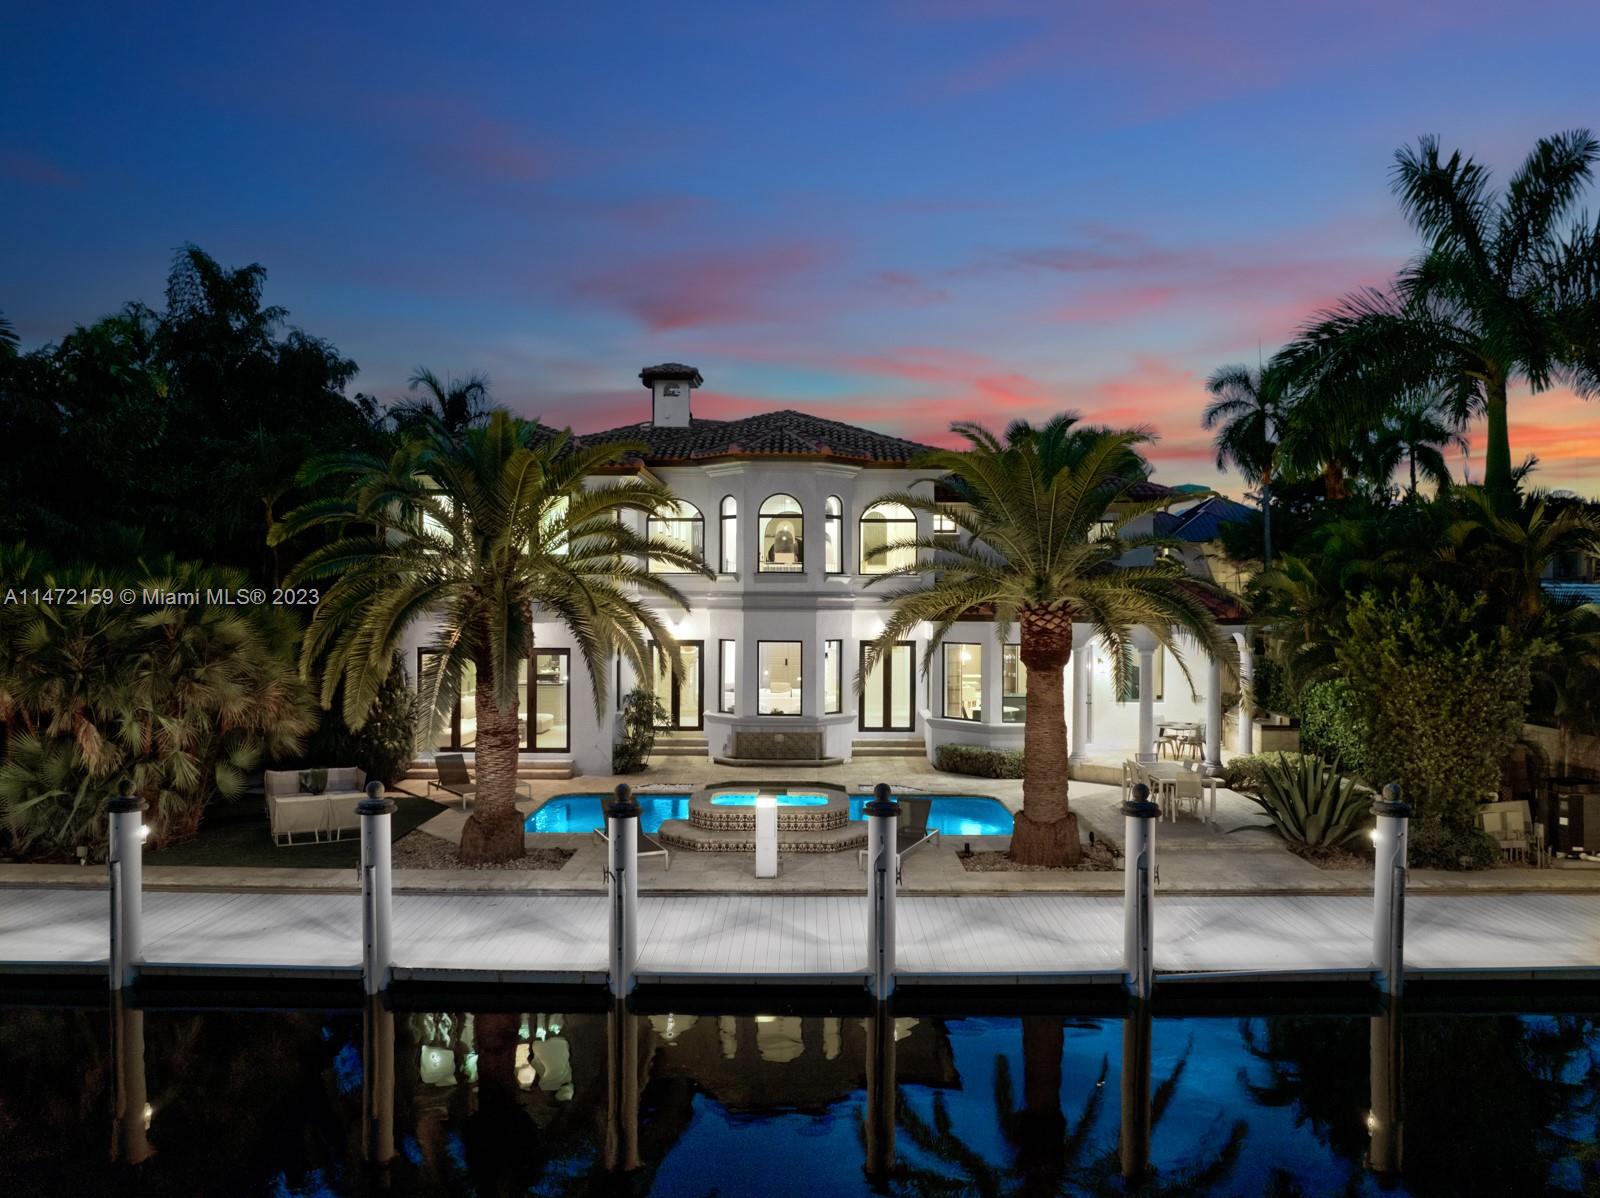 Property for Sale at 168 Fiesta Way, Fort Lauderdale, Broward County, Florida - Bedrooms: 6 
Bathrooms: 6  - $6,490,000